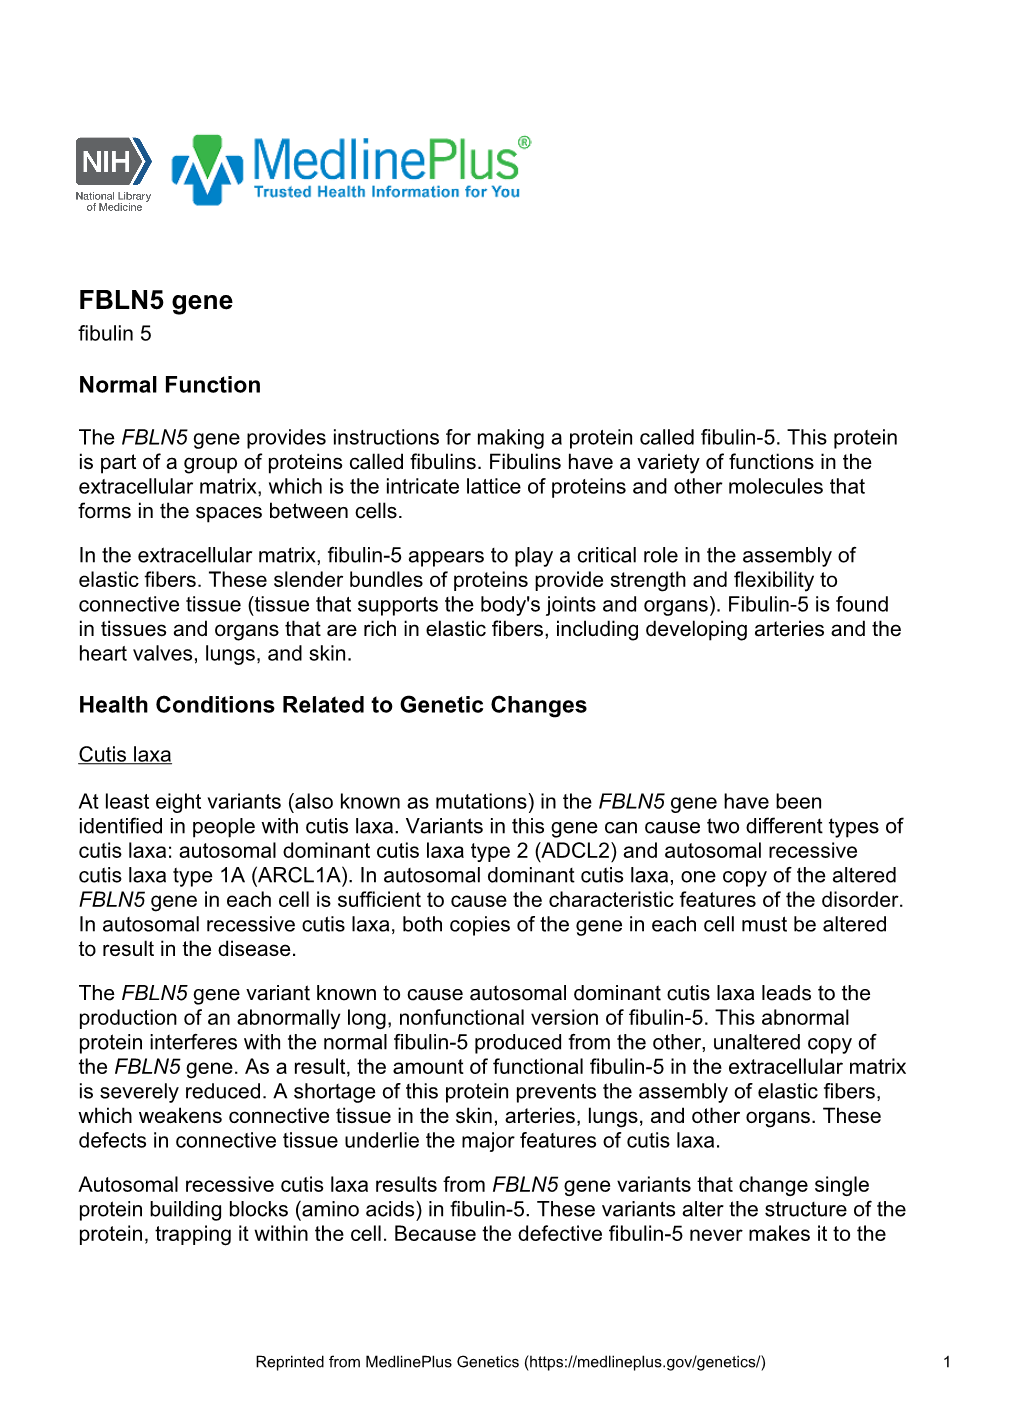 FBLN5 Gene Fibulin 5